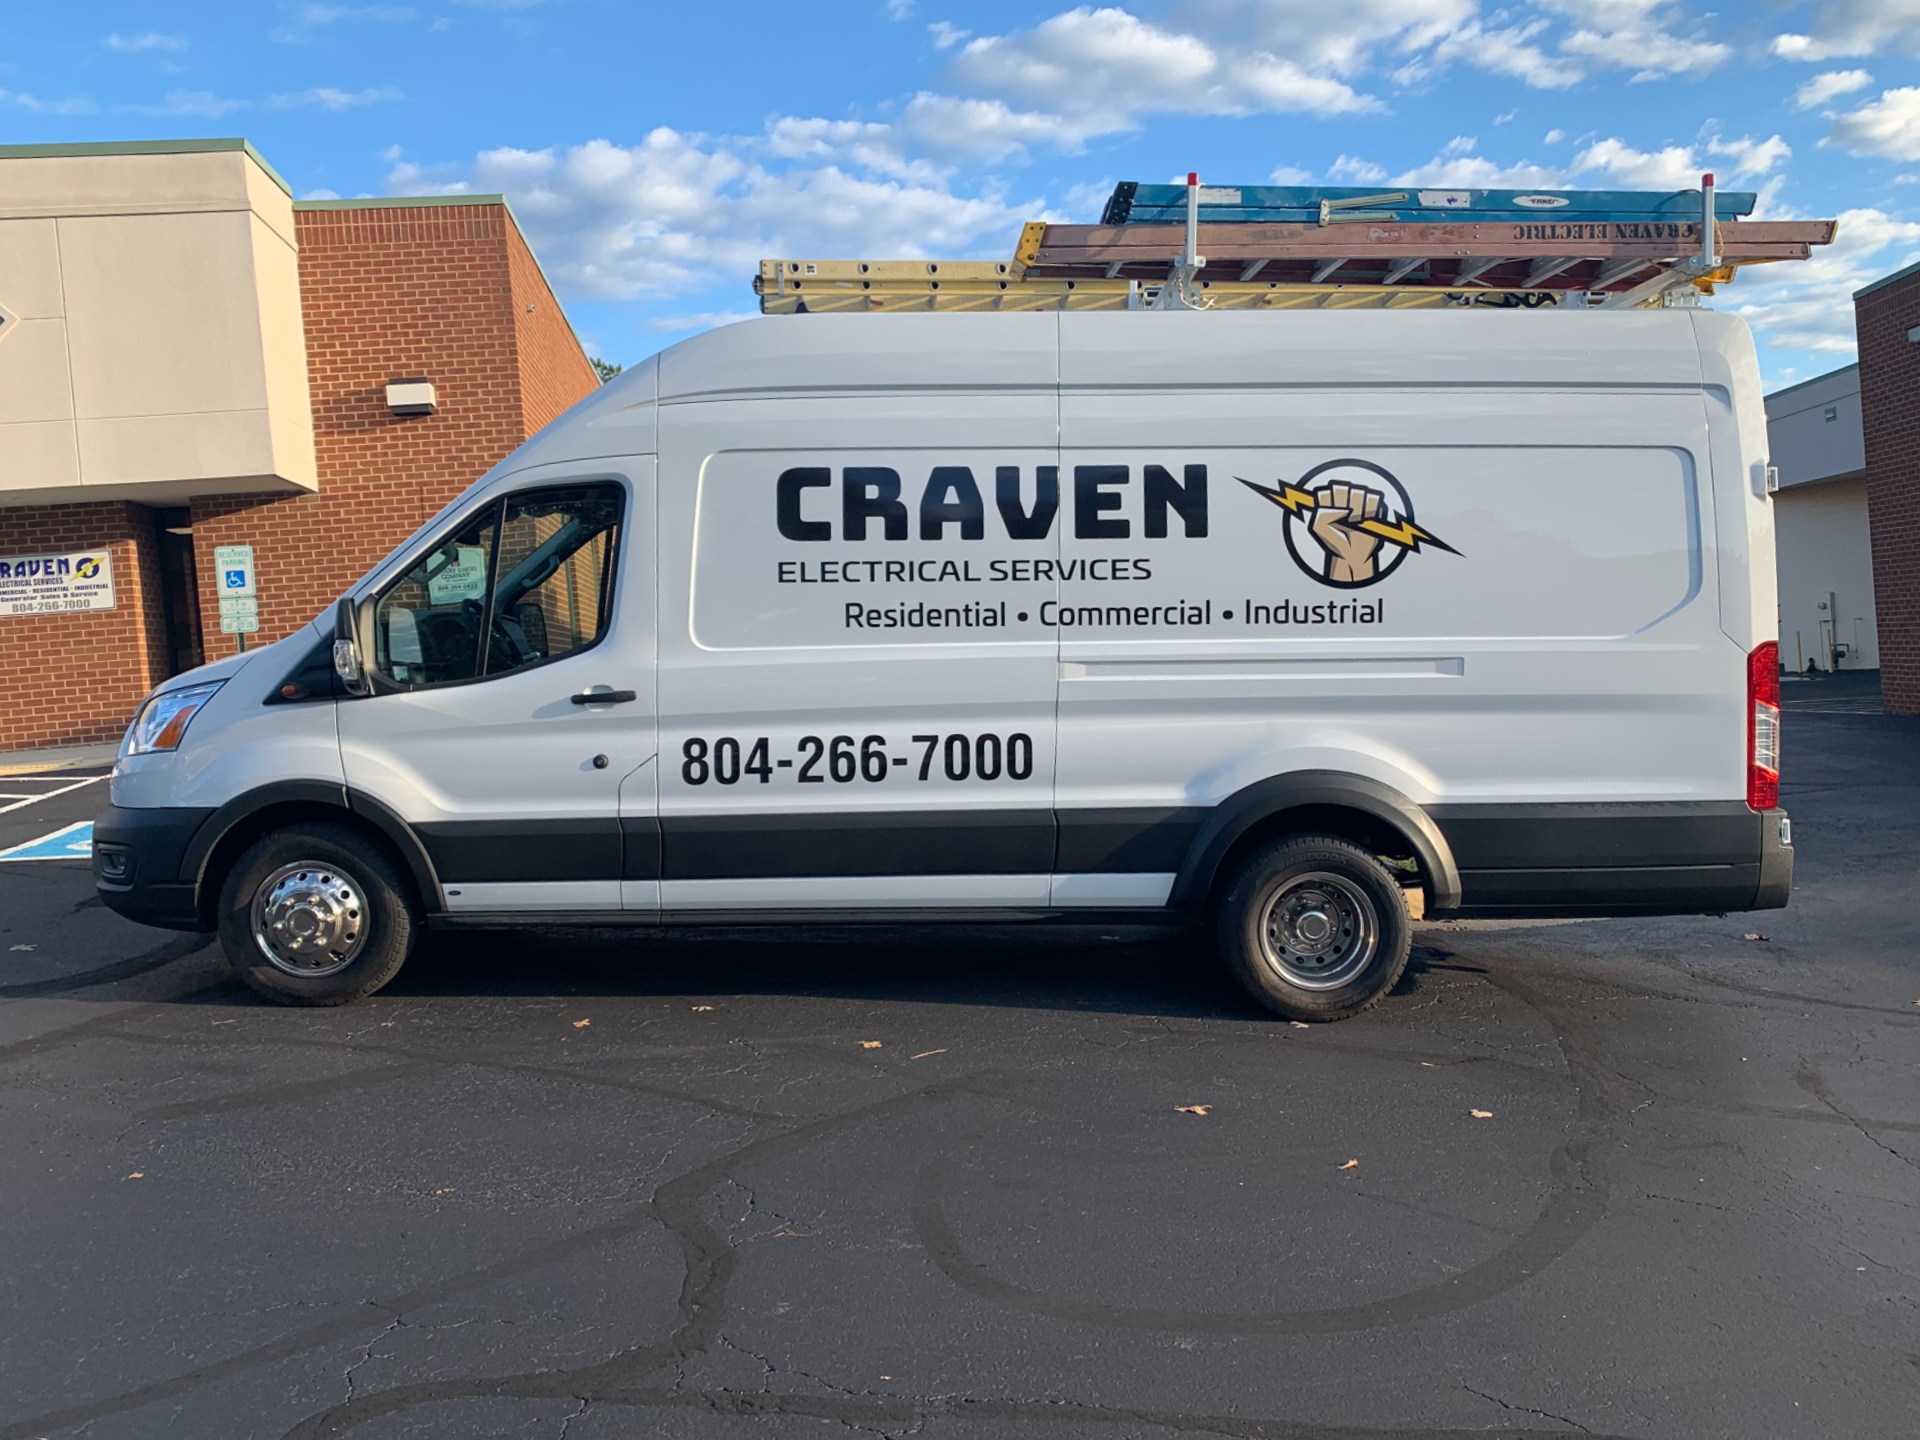 Craven Electrical Services